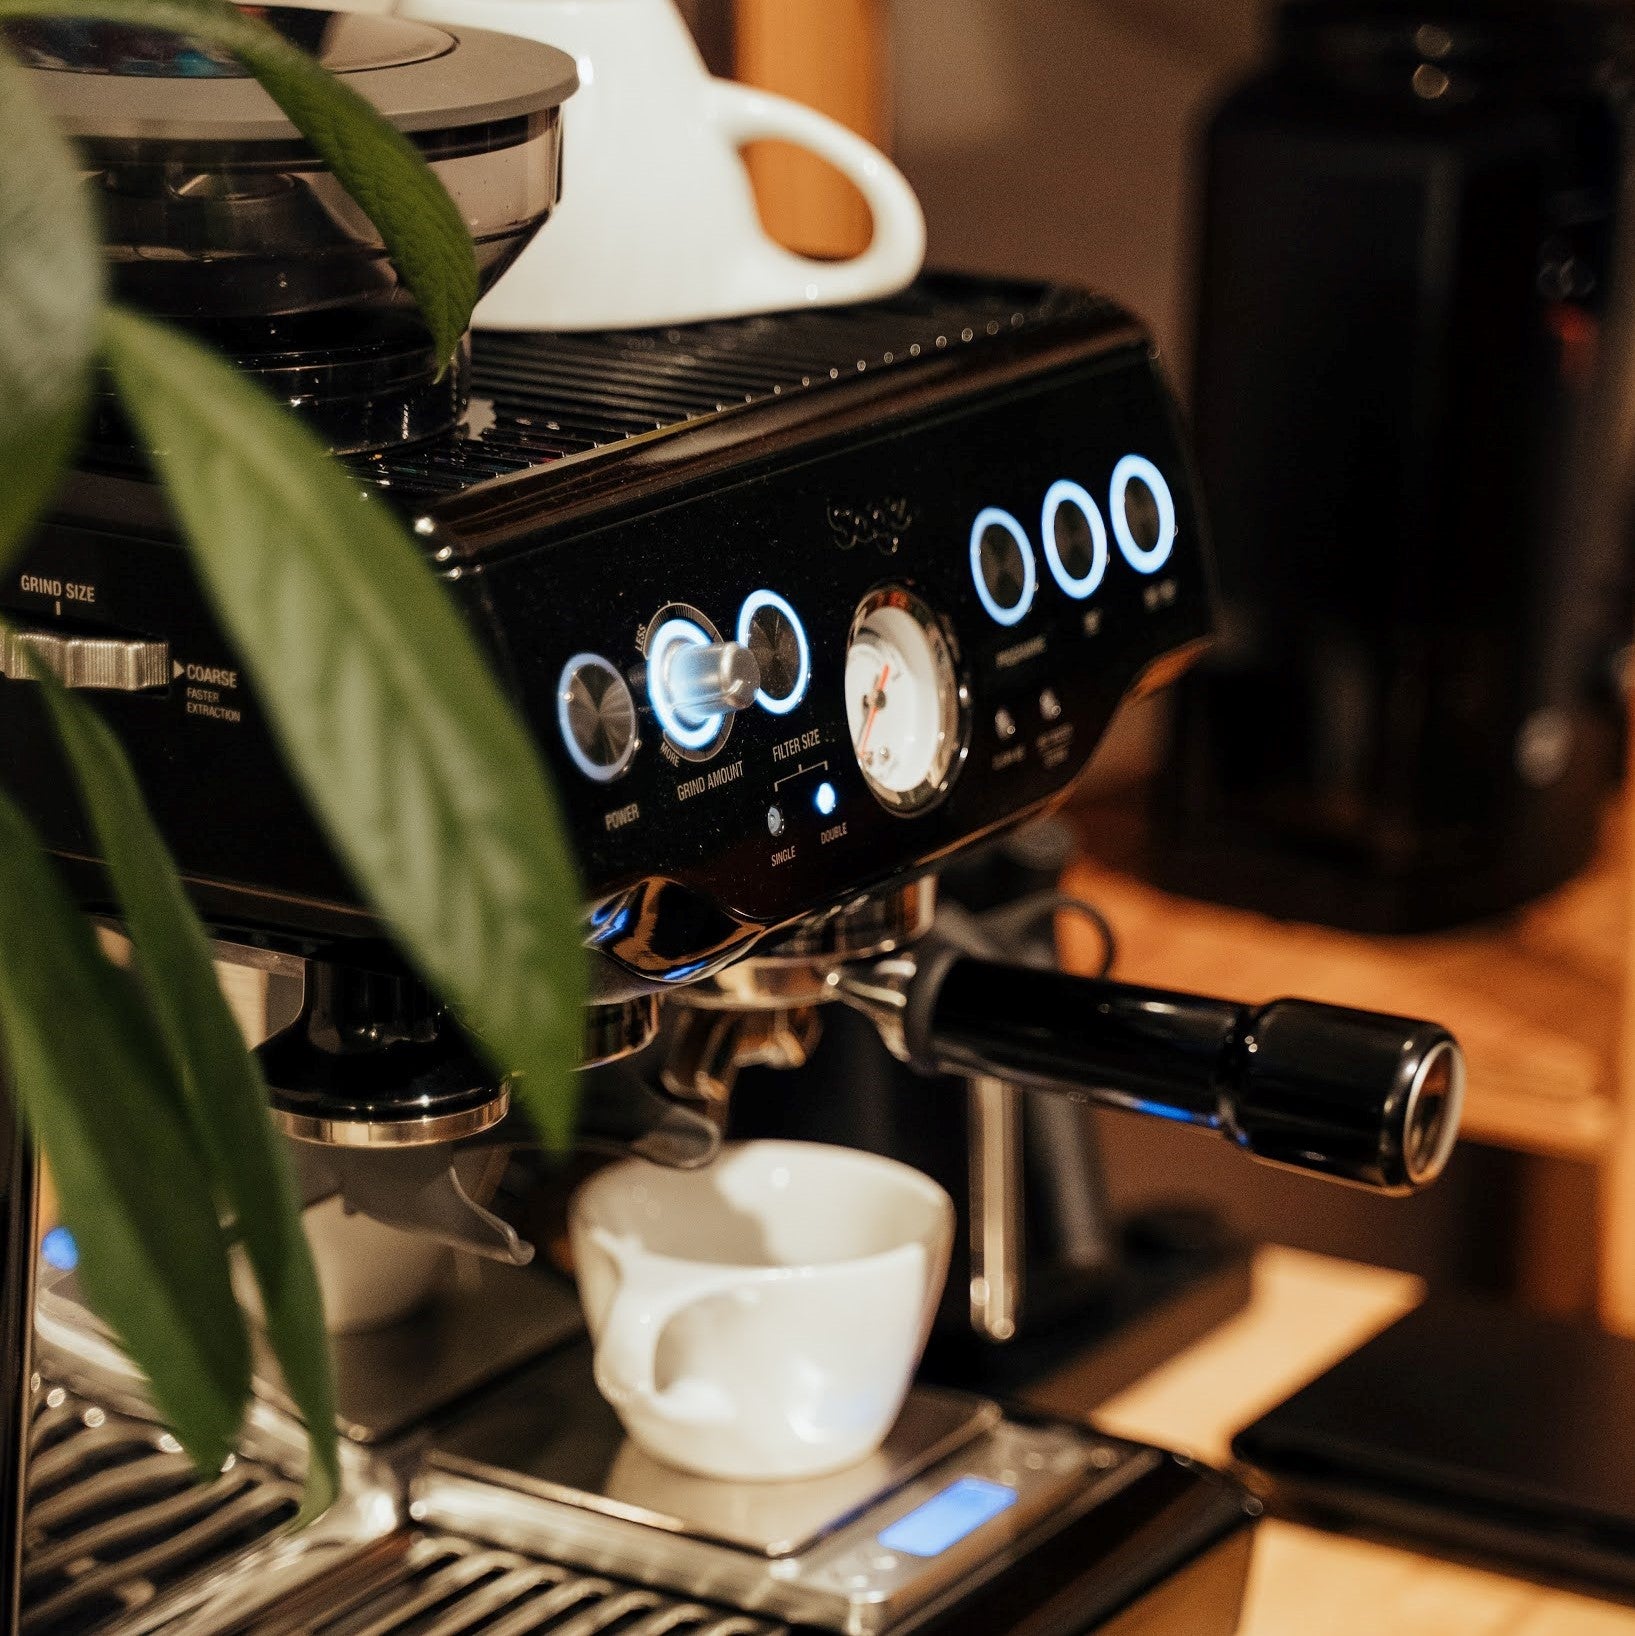 An espresso machine with a mug on it.